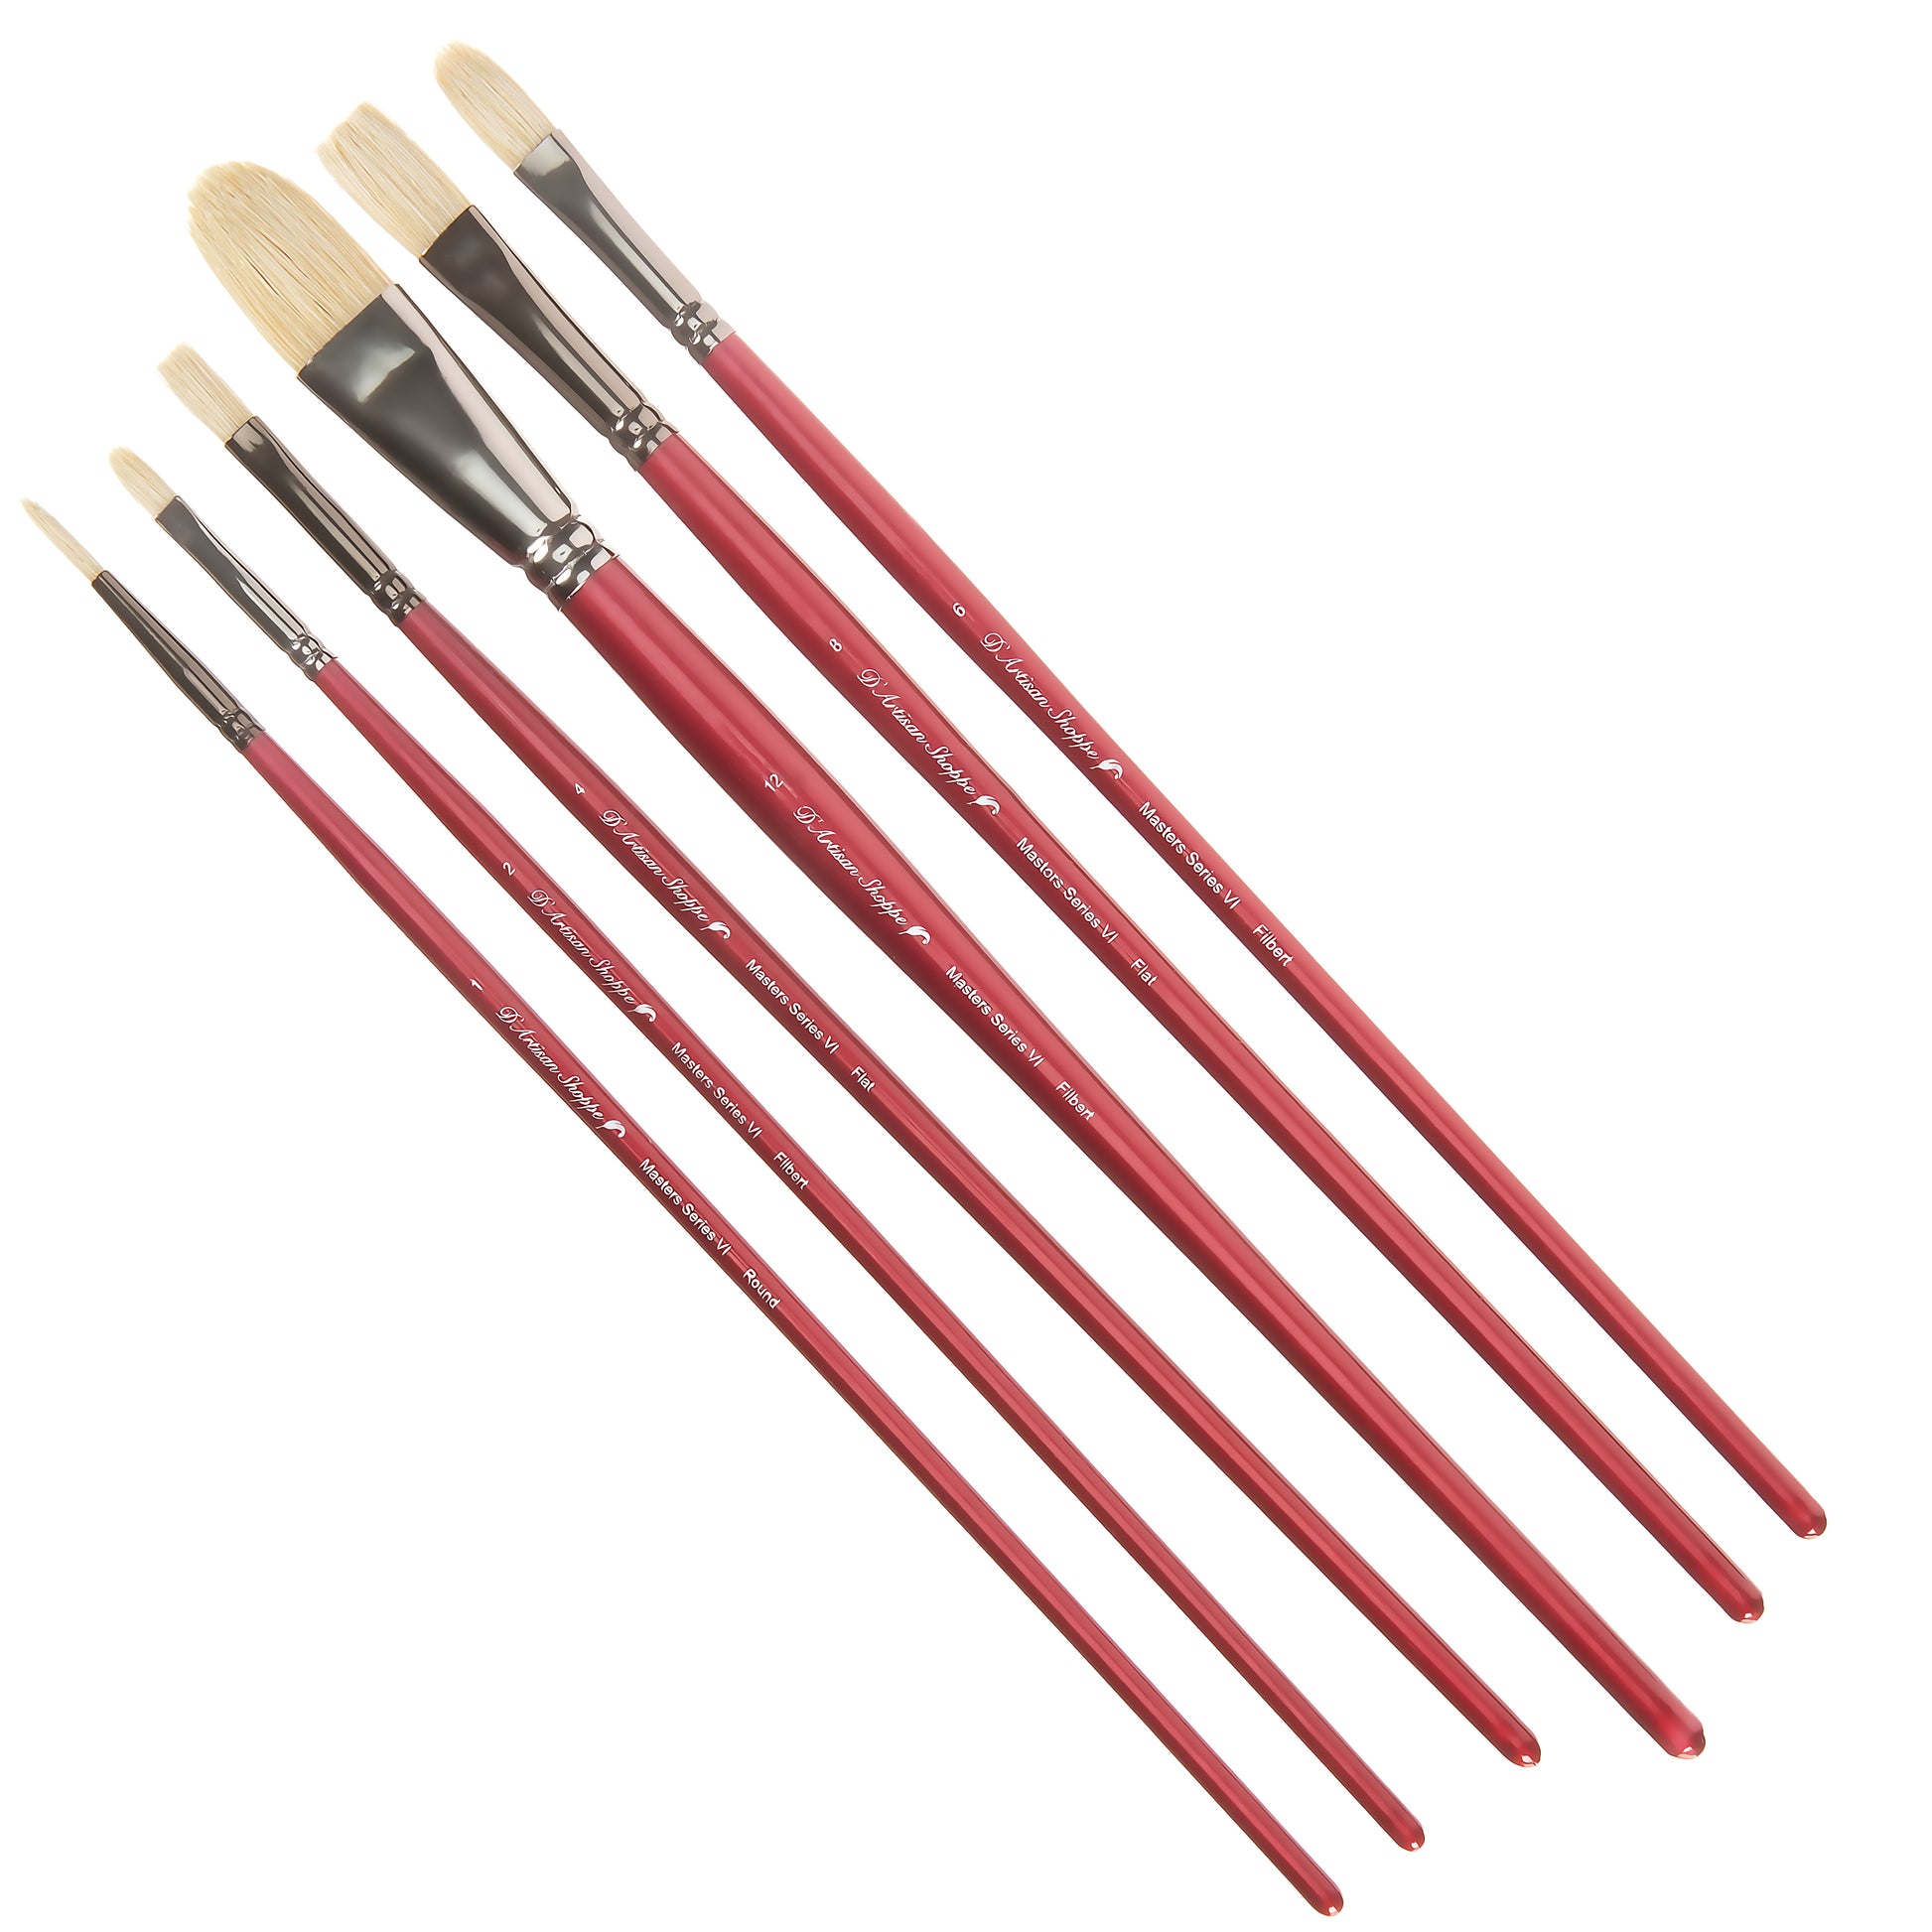 Maestro XV Art Paint Brush 15pc Set – D'Artisan Shoppe